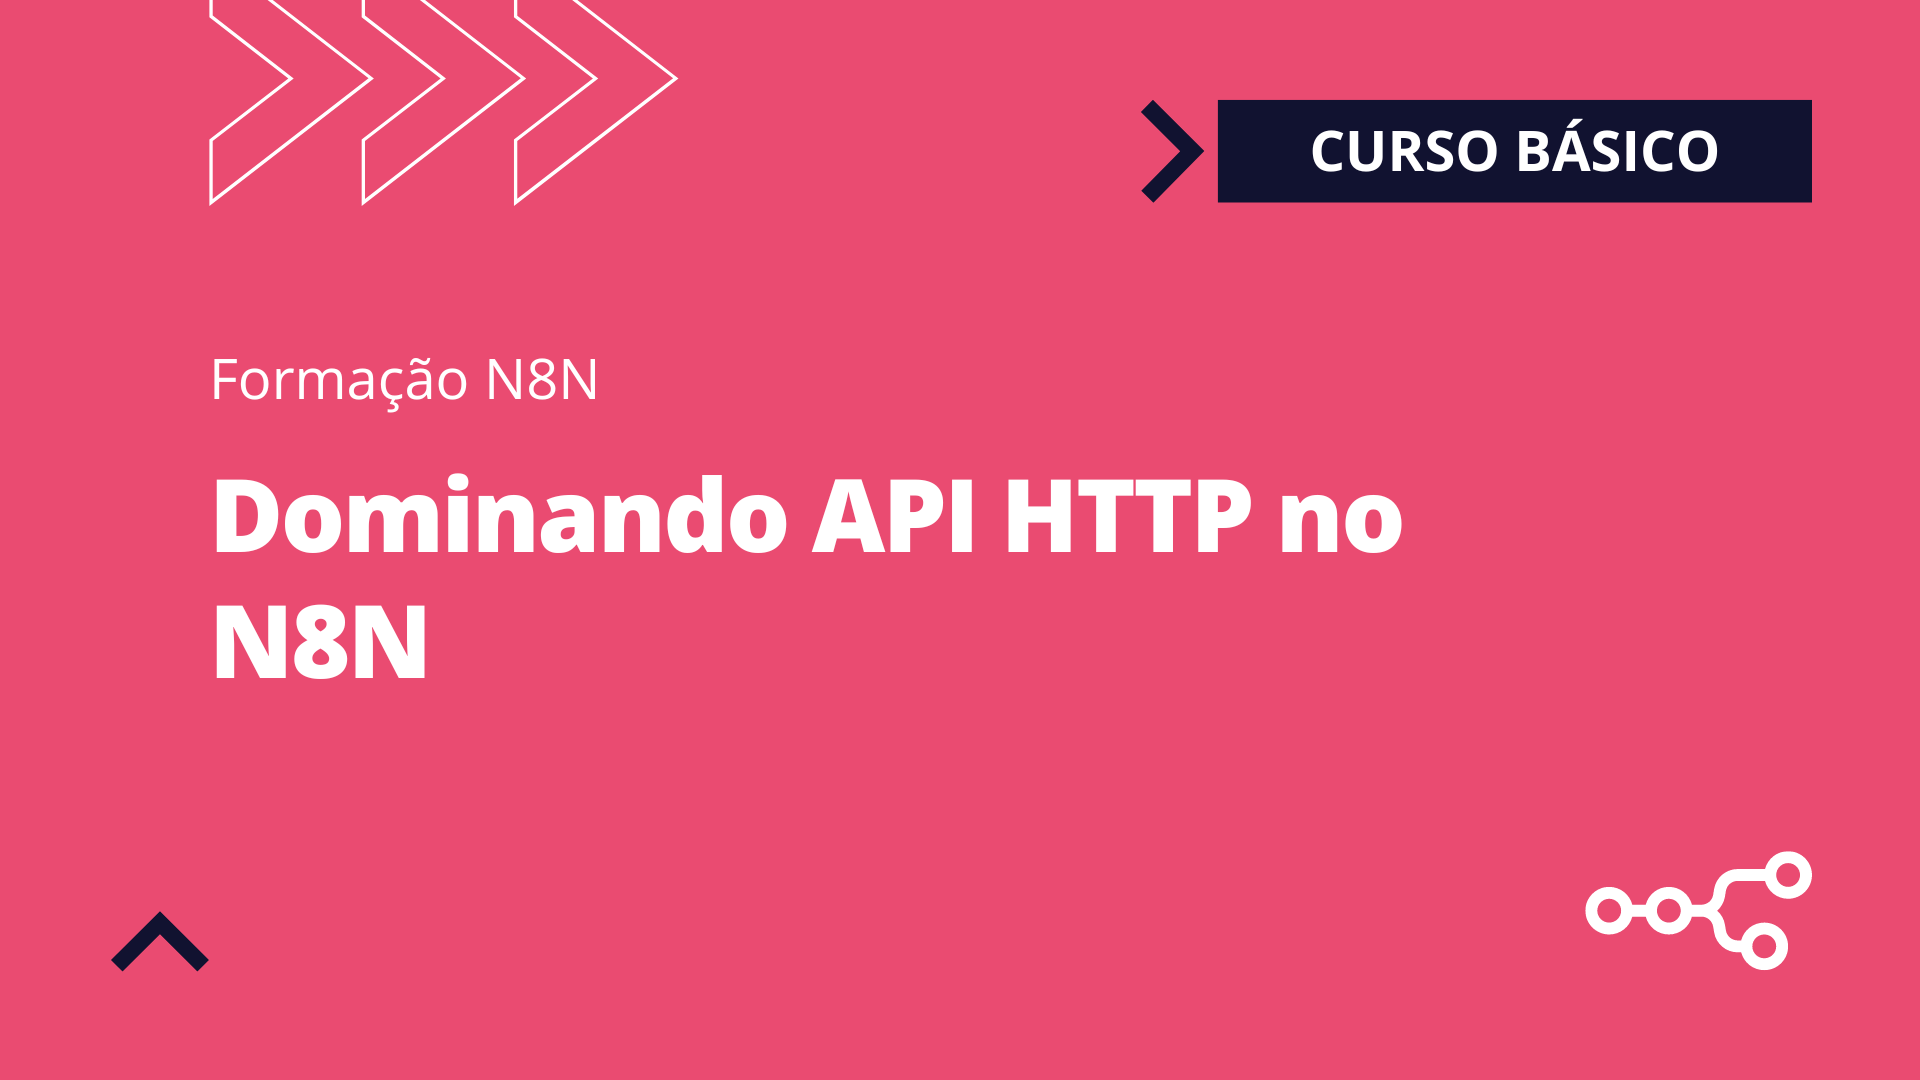  Dominando API HTTP no N8N